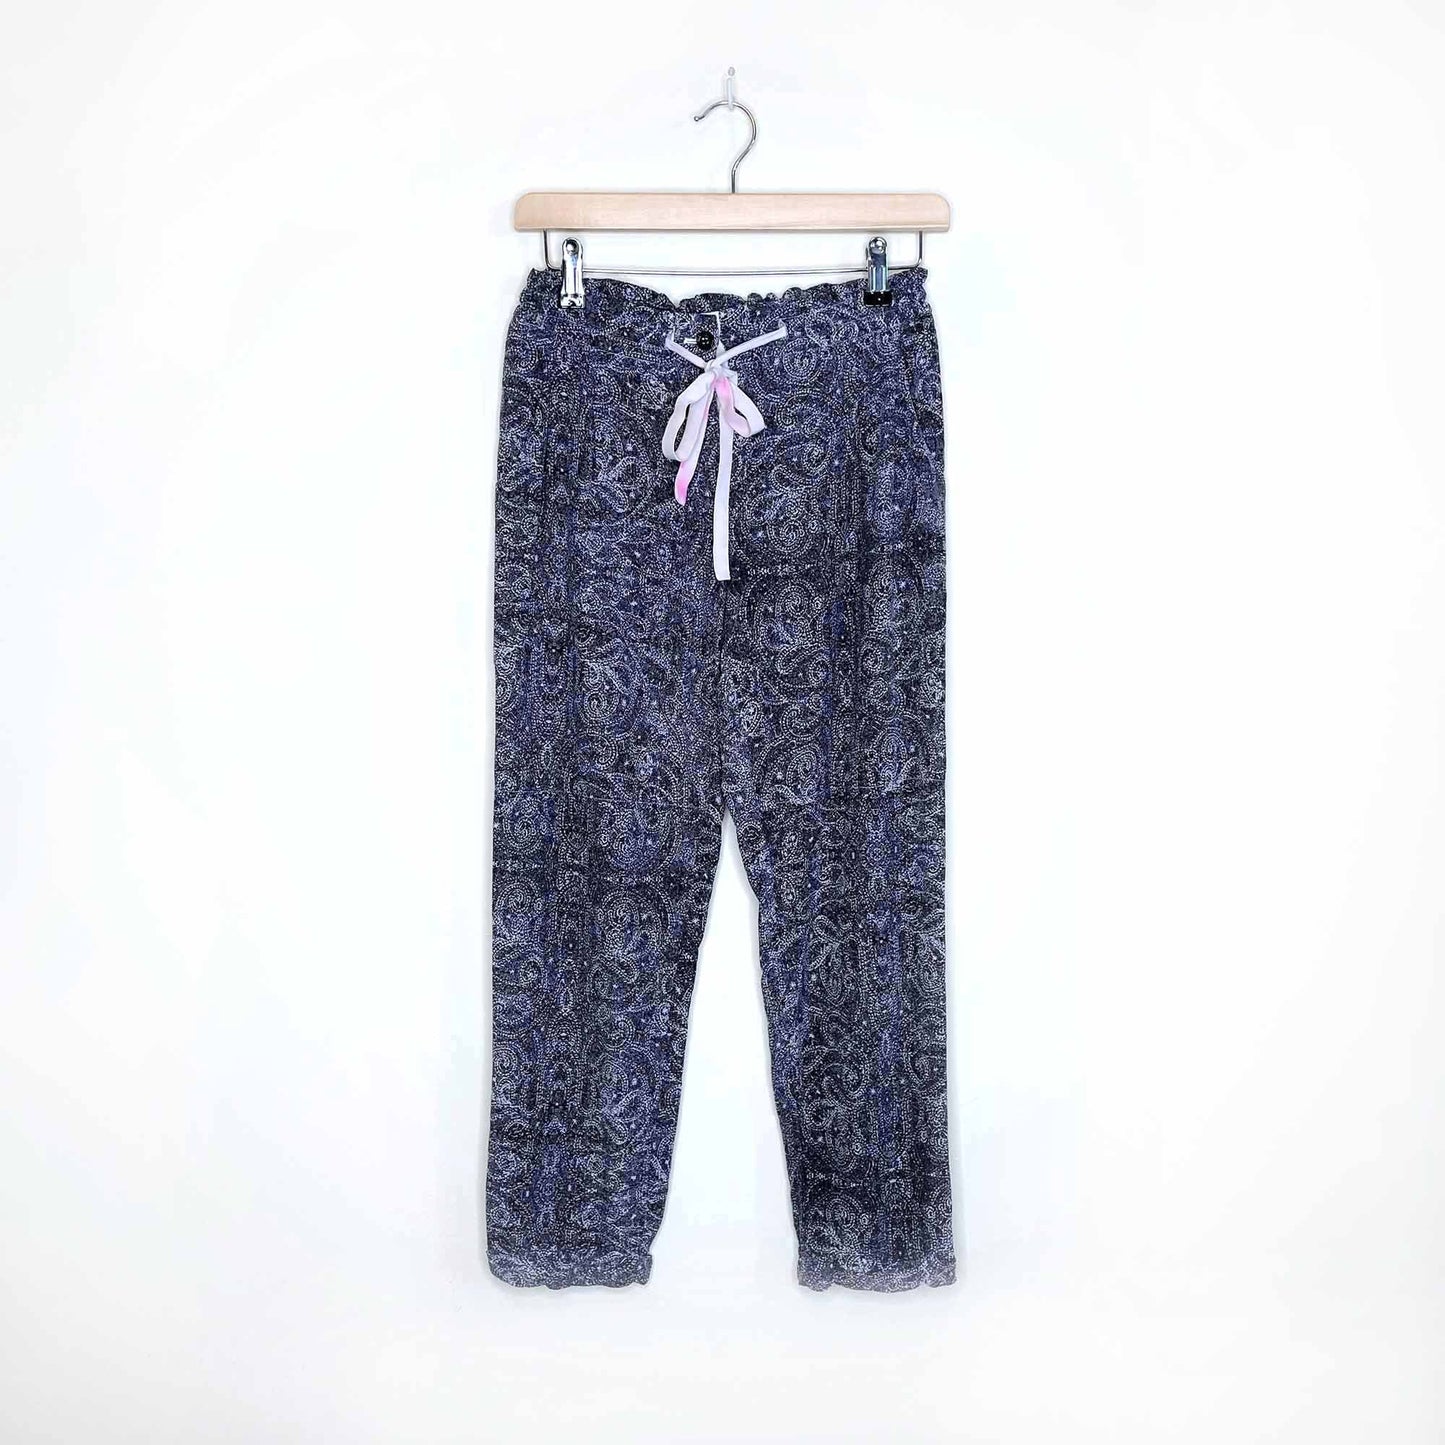 wilfred marais silk paisley jogger pants - size xxs